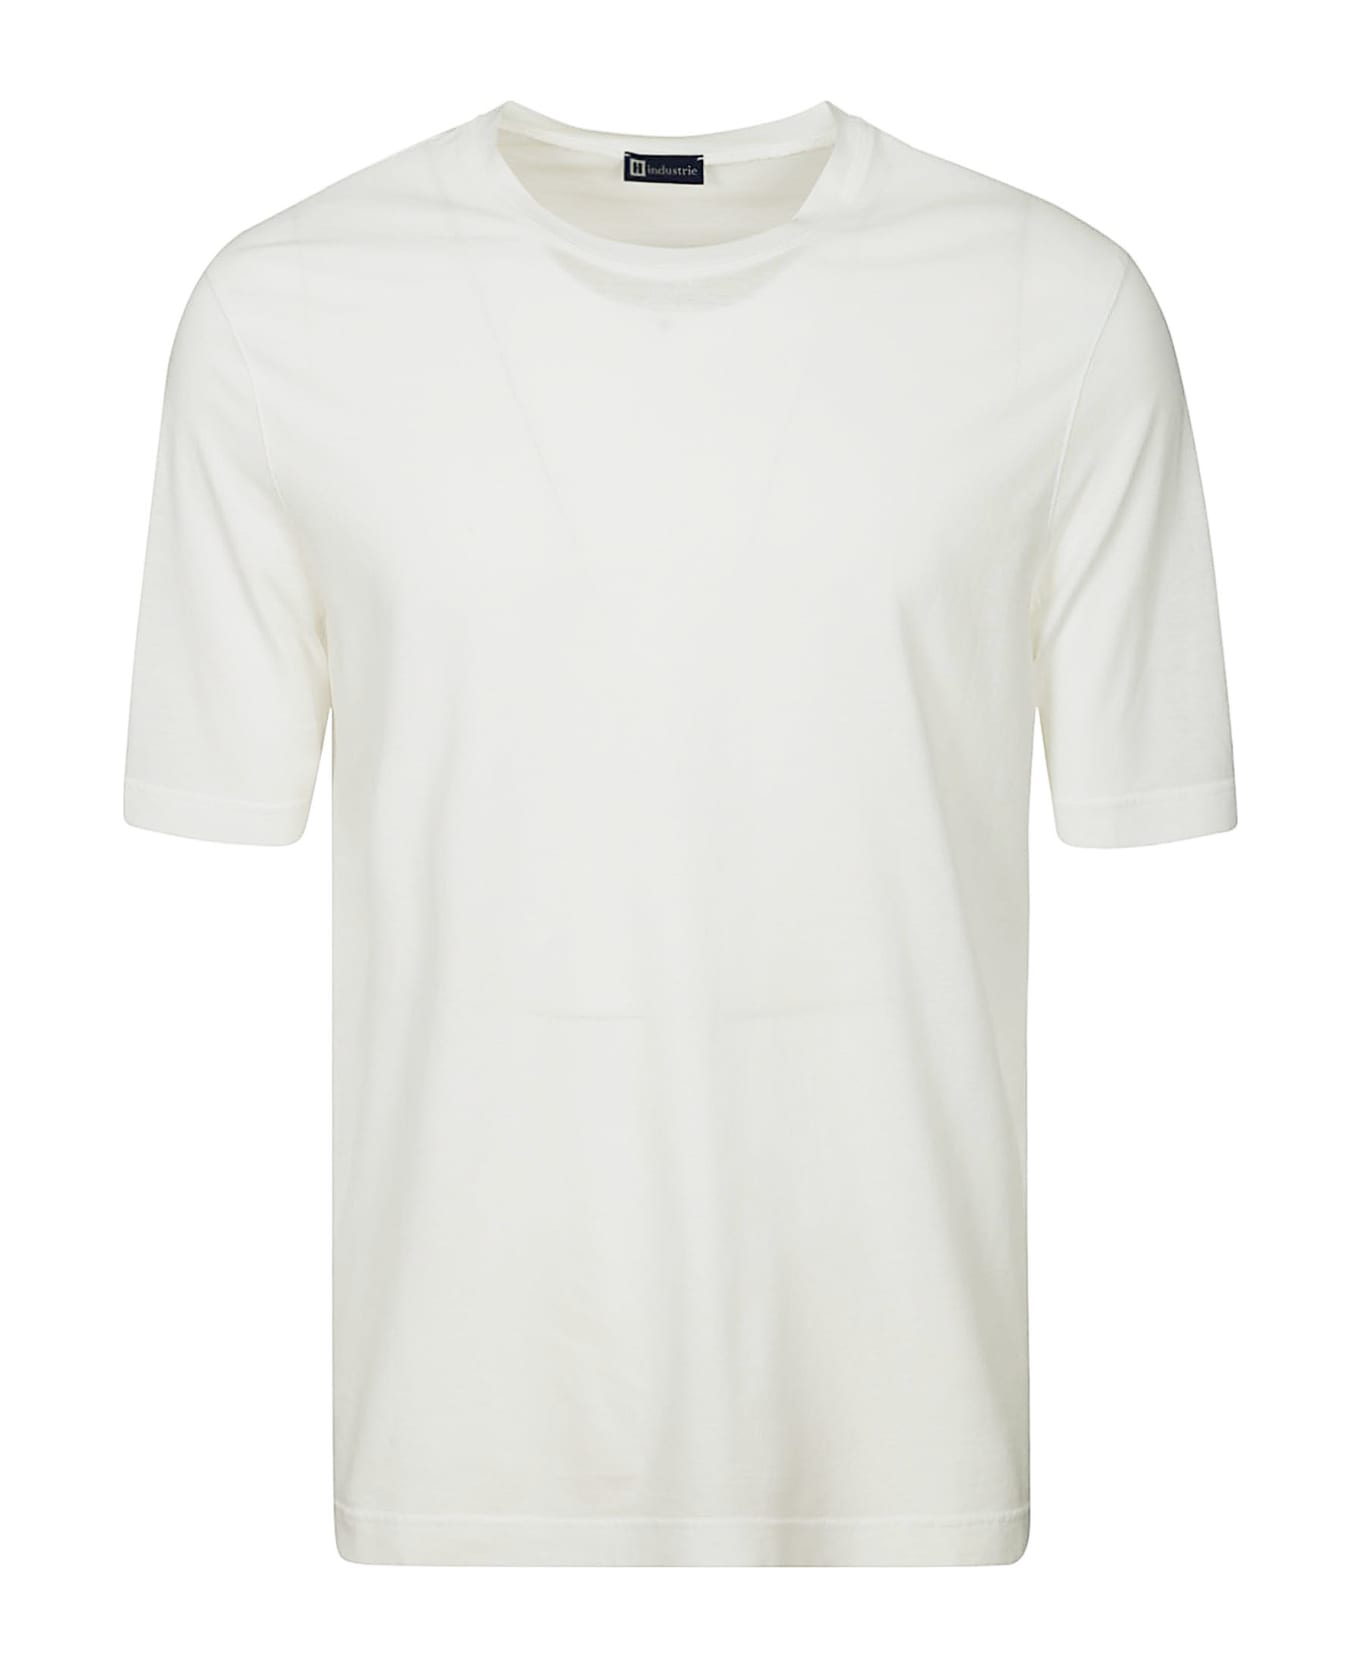 Filippo De Laurentiis Tshirt - White シャツ